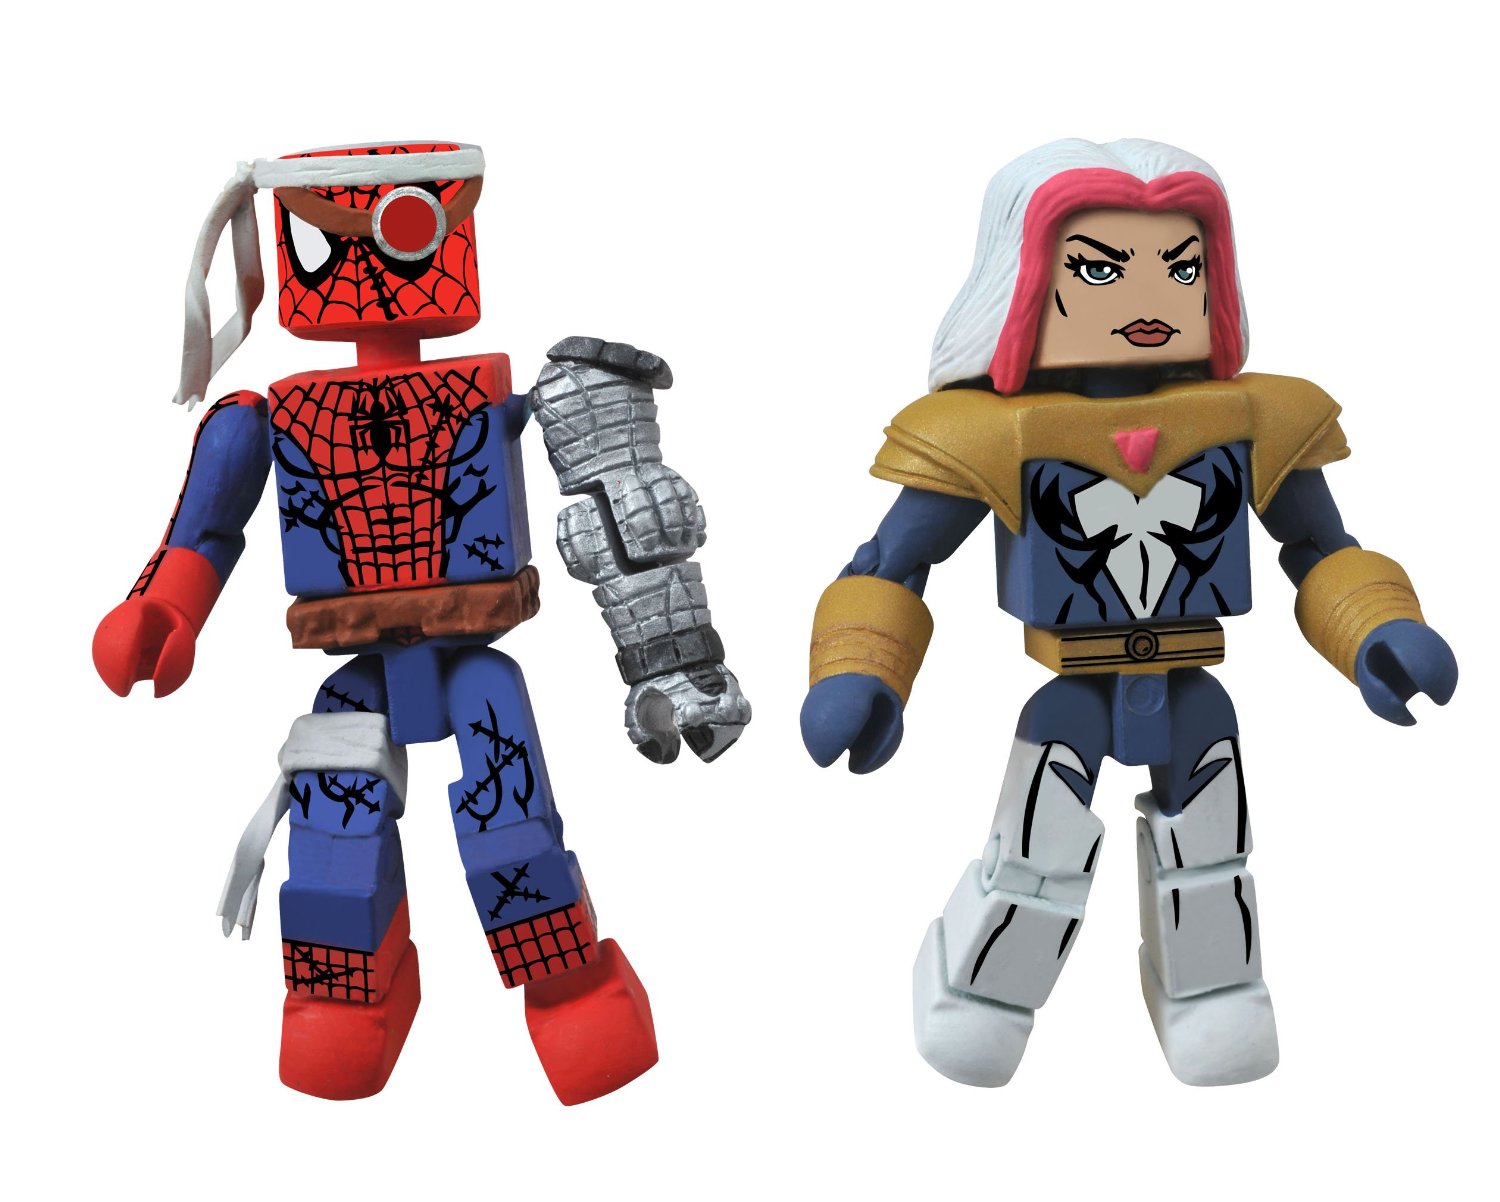 Marvel Minimates Series 50 Cyborg Spider-Man and Marvel's Songbird 2-Pack Action Figure